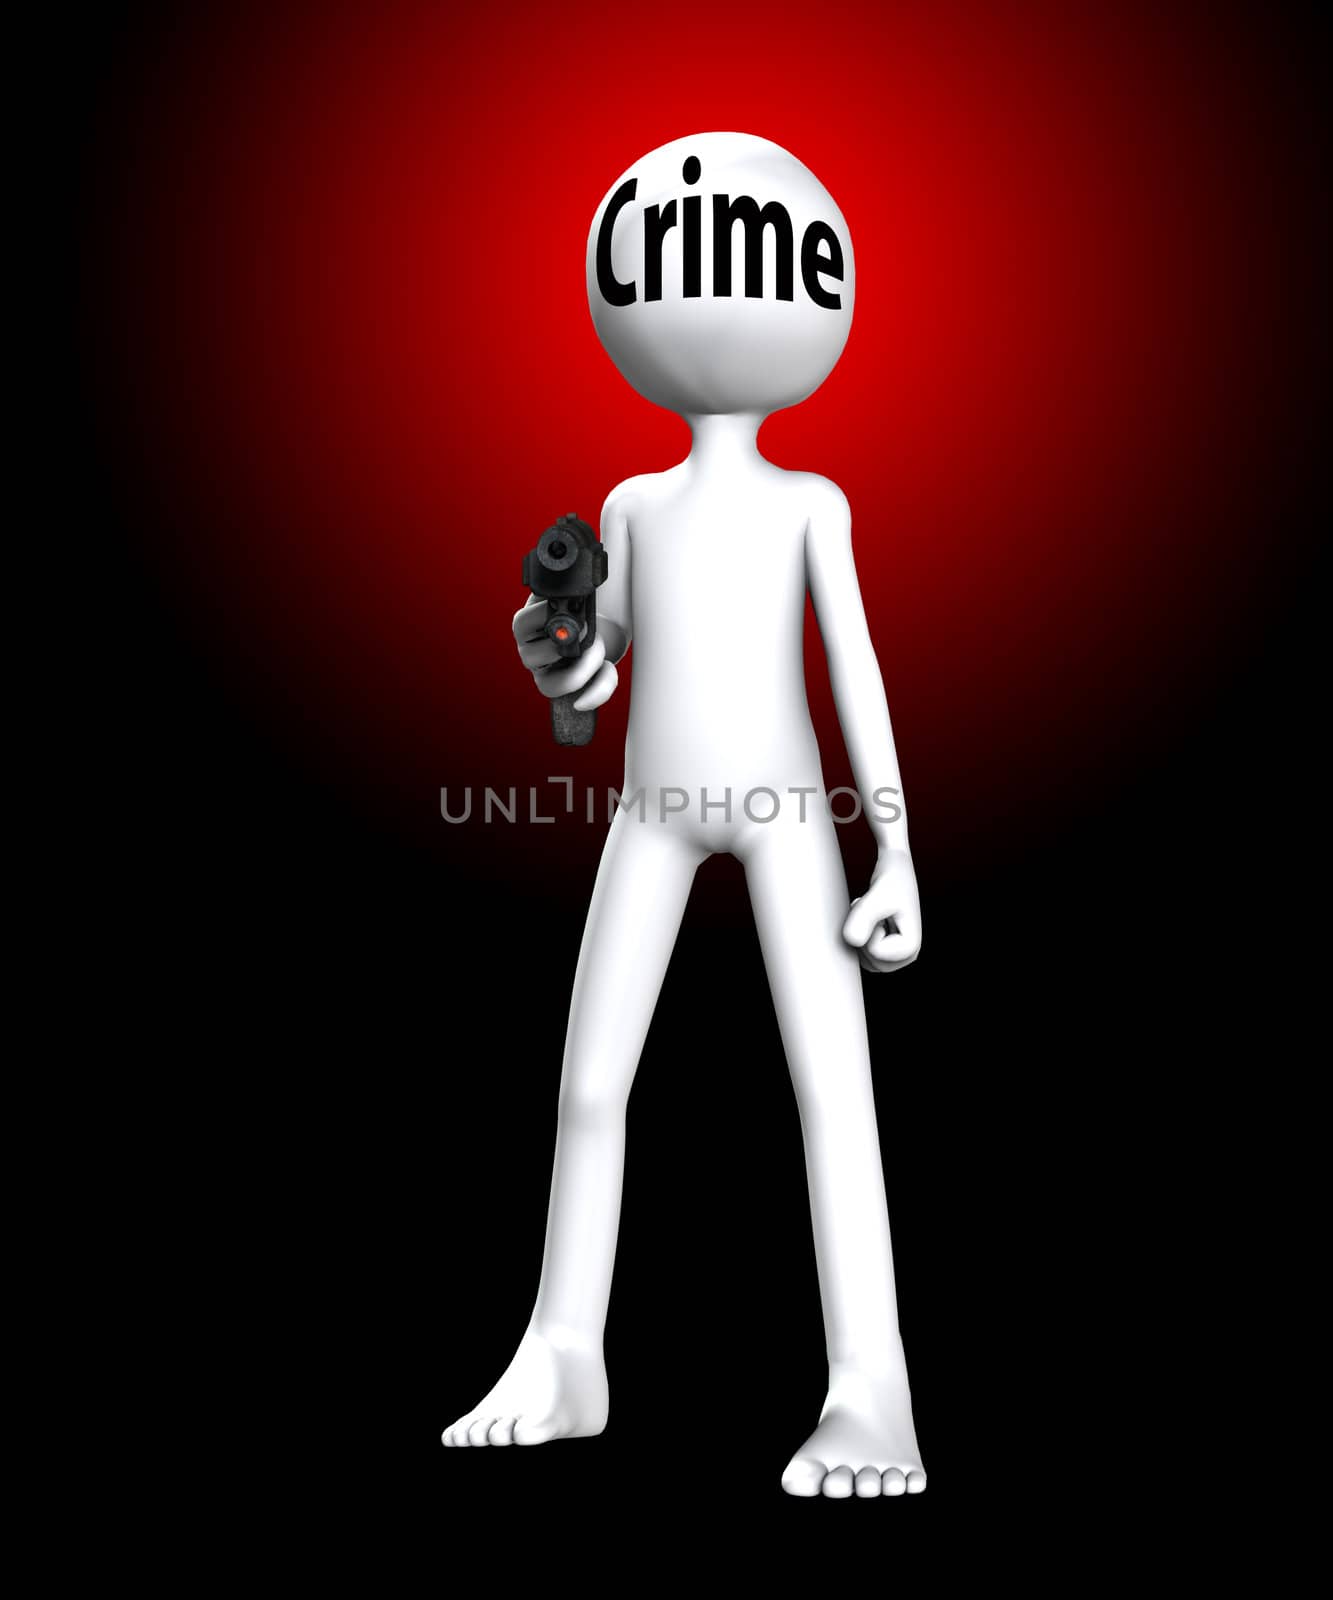 Faceless figure holding a gun highlighting criminal concepts.